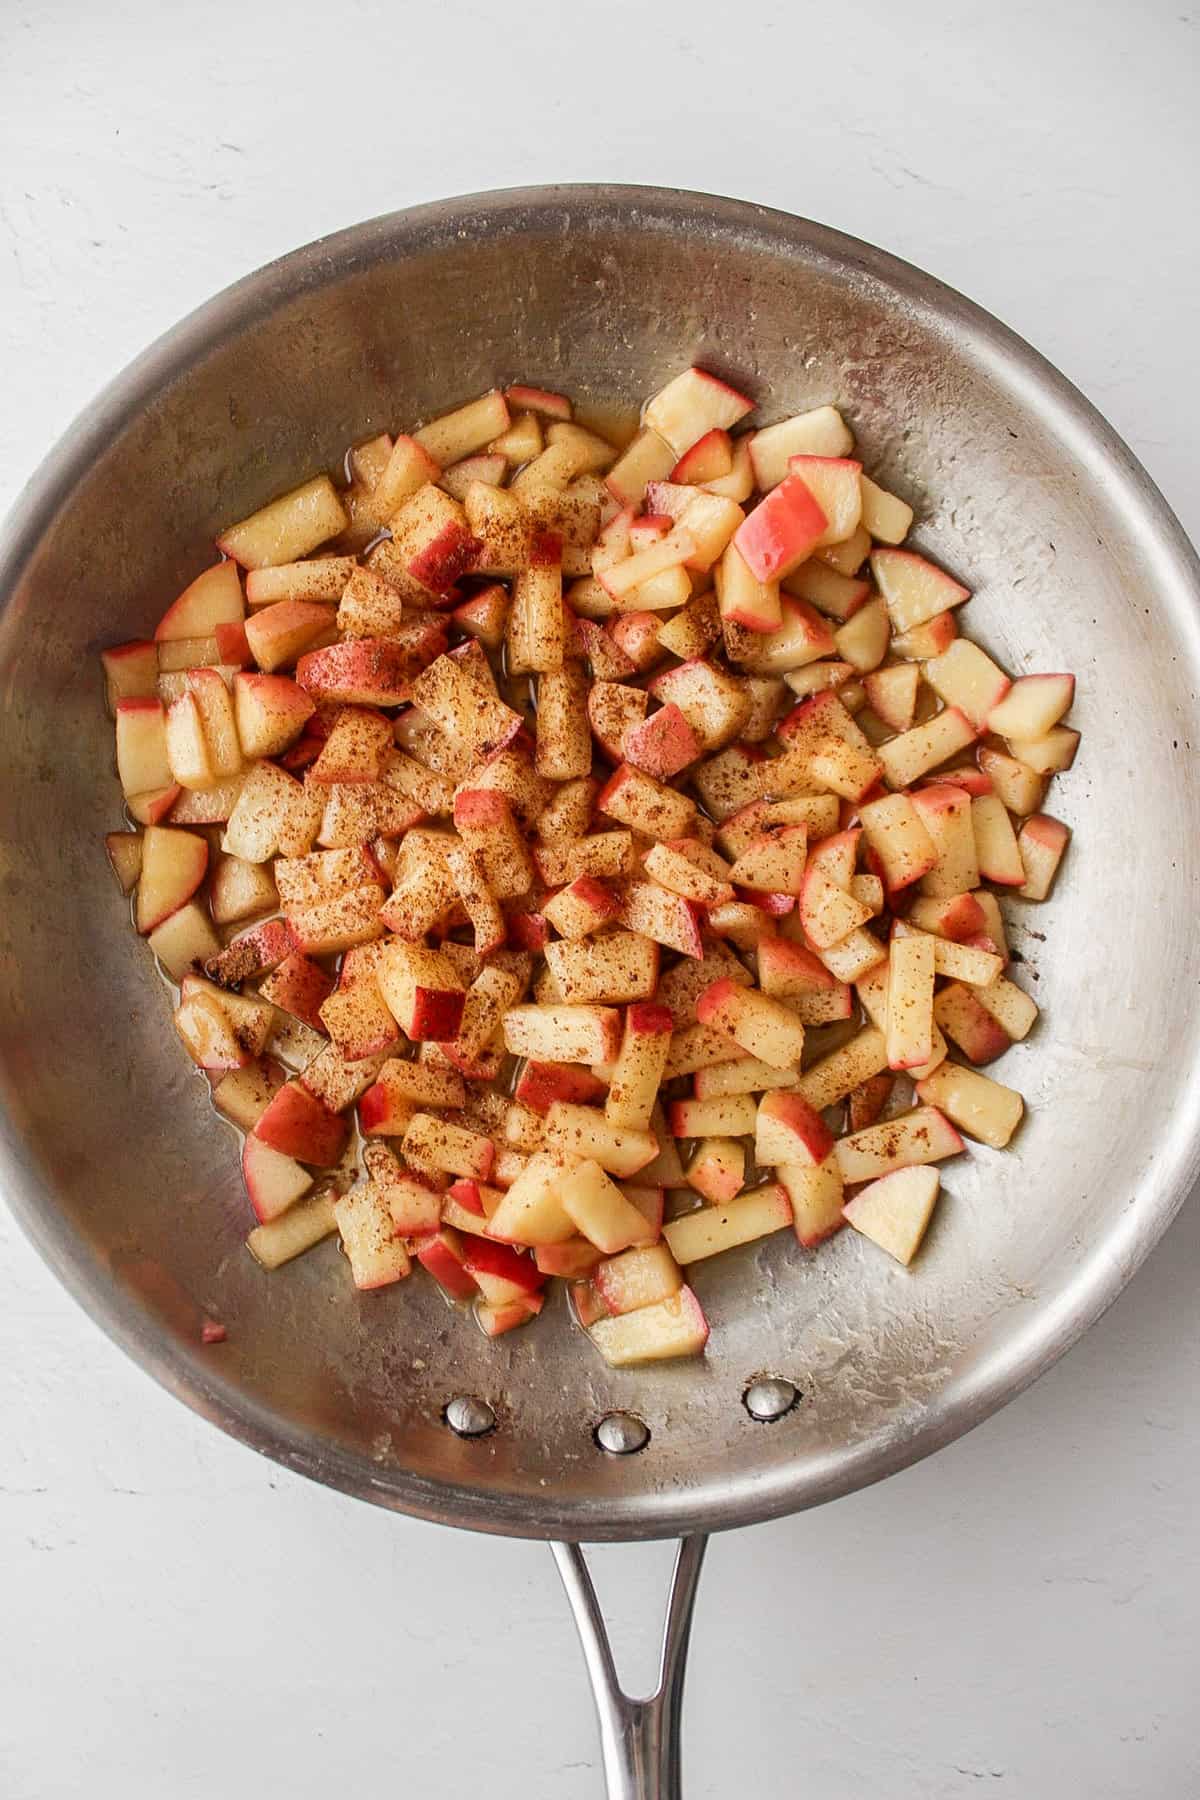 sautéed apples in a pan